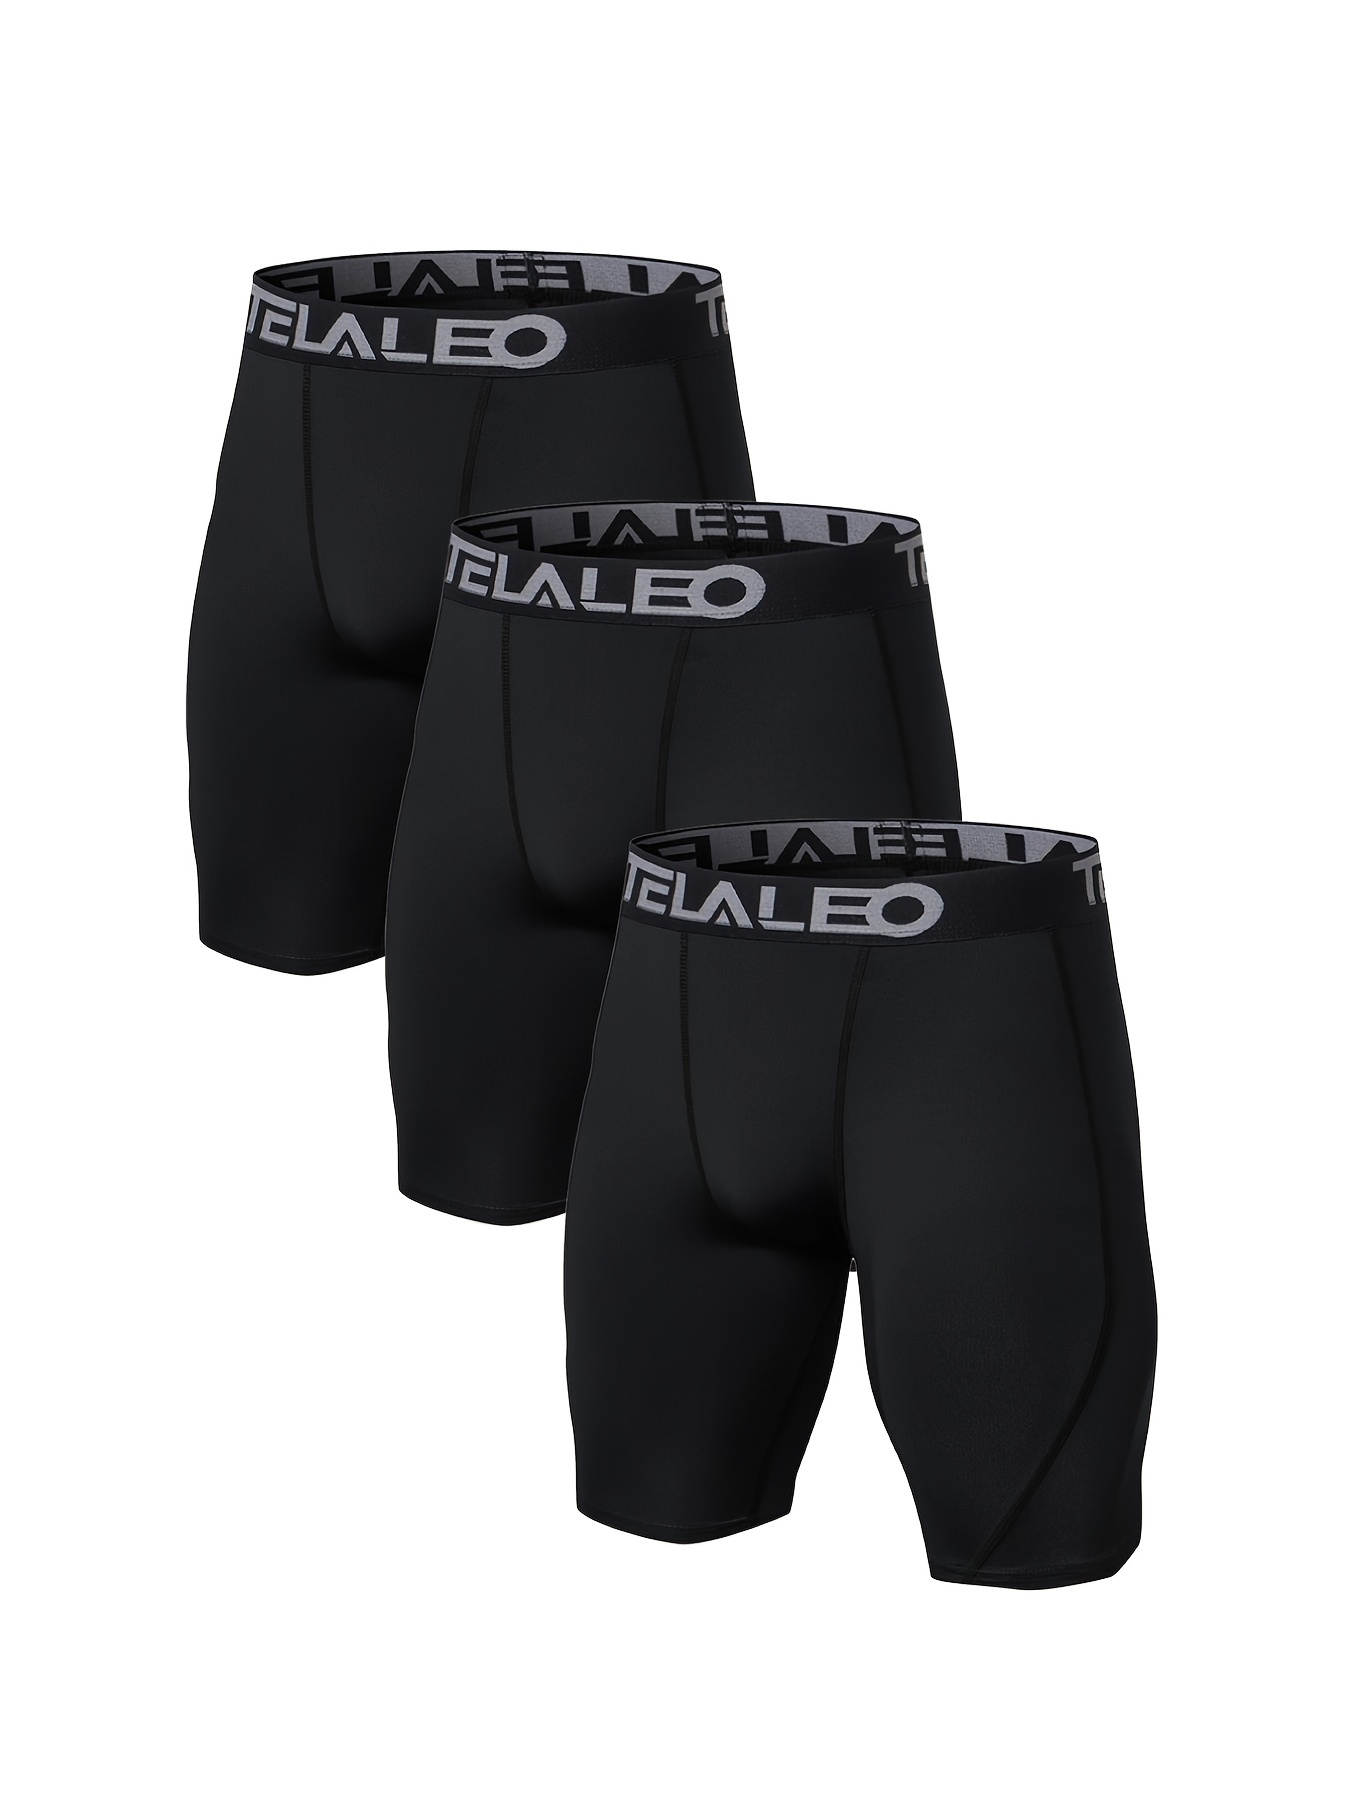 Men's Compression Shorts Spandex Athletic - Temu